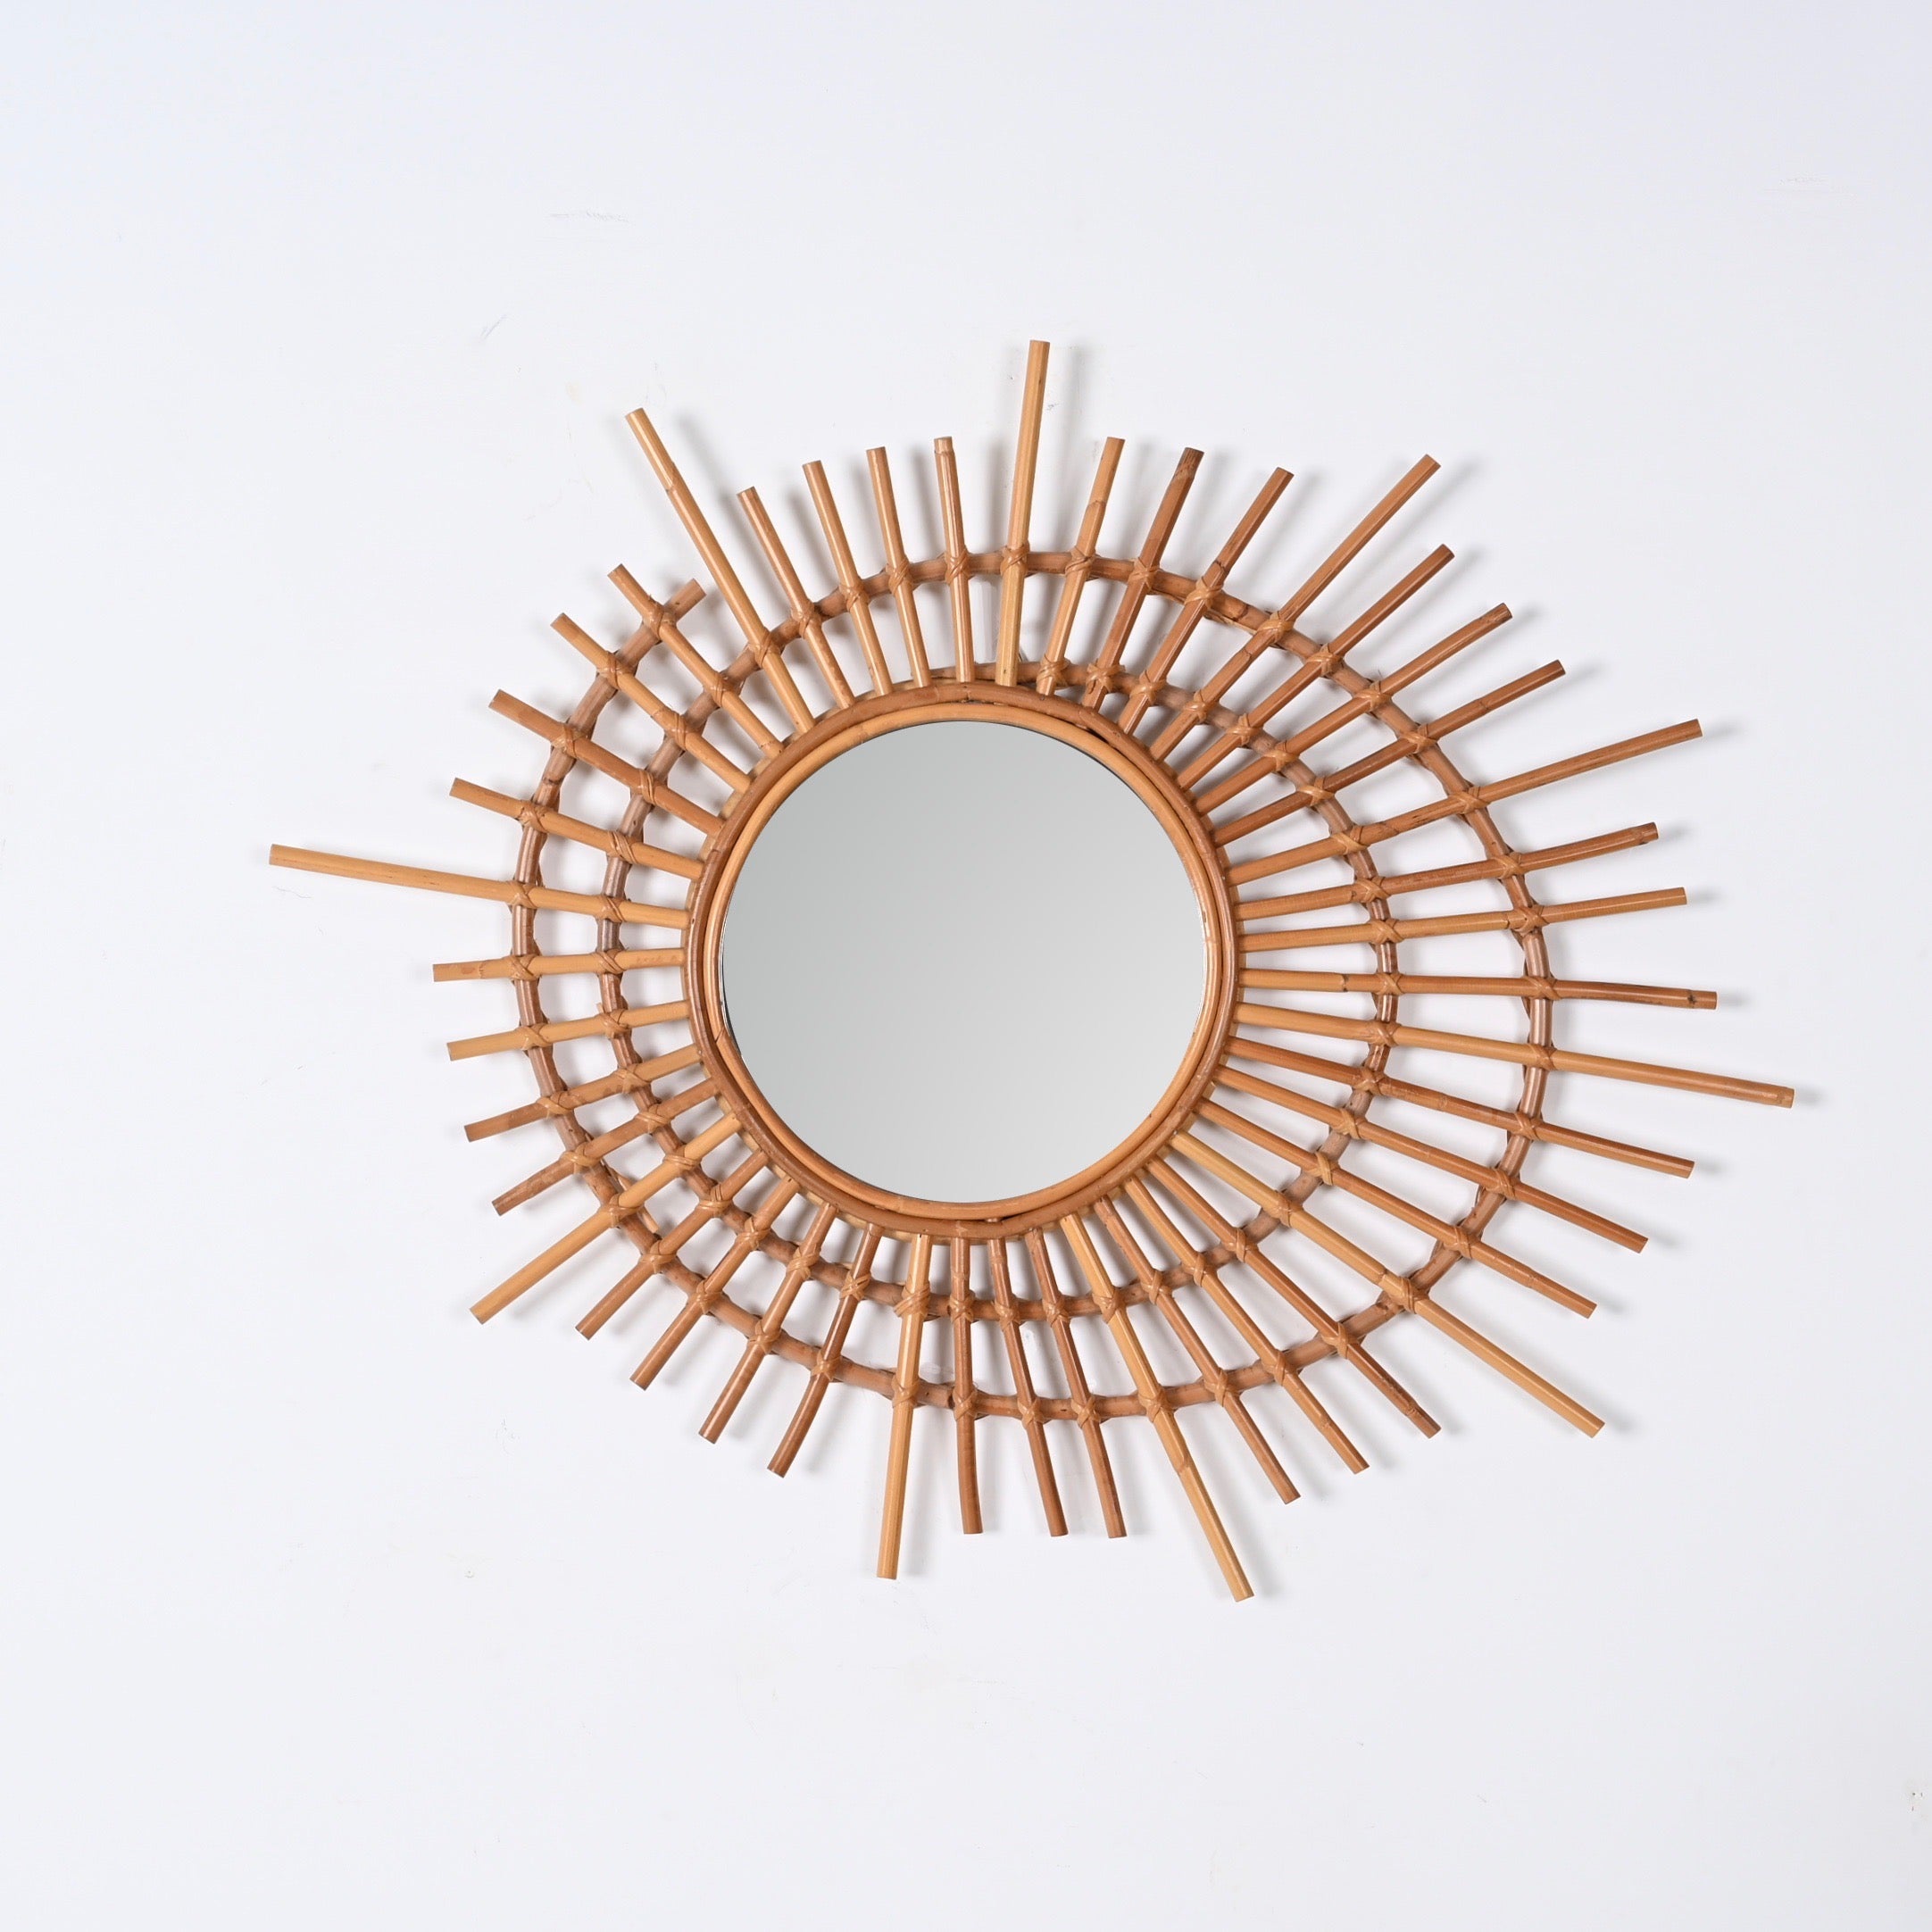 Late 20th Century Midcentury Sun-Shaped Rattan and Bamboo Italian Round Mirror, 1970s